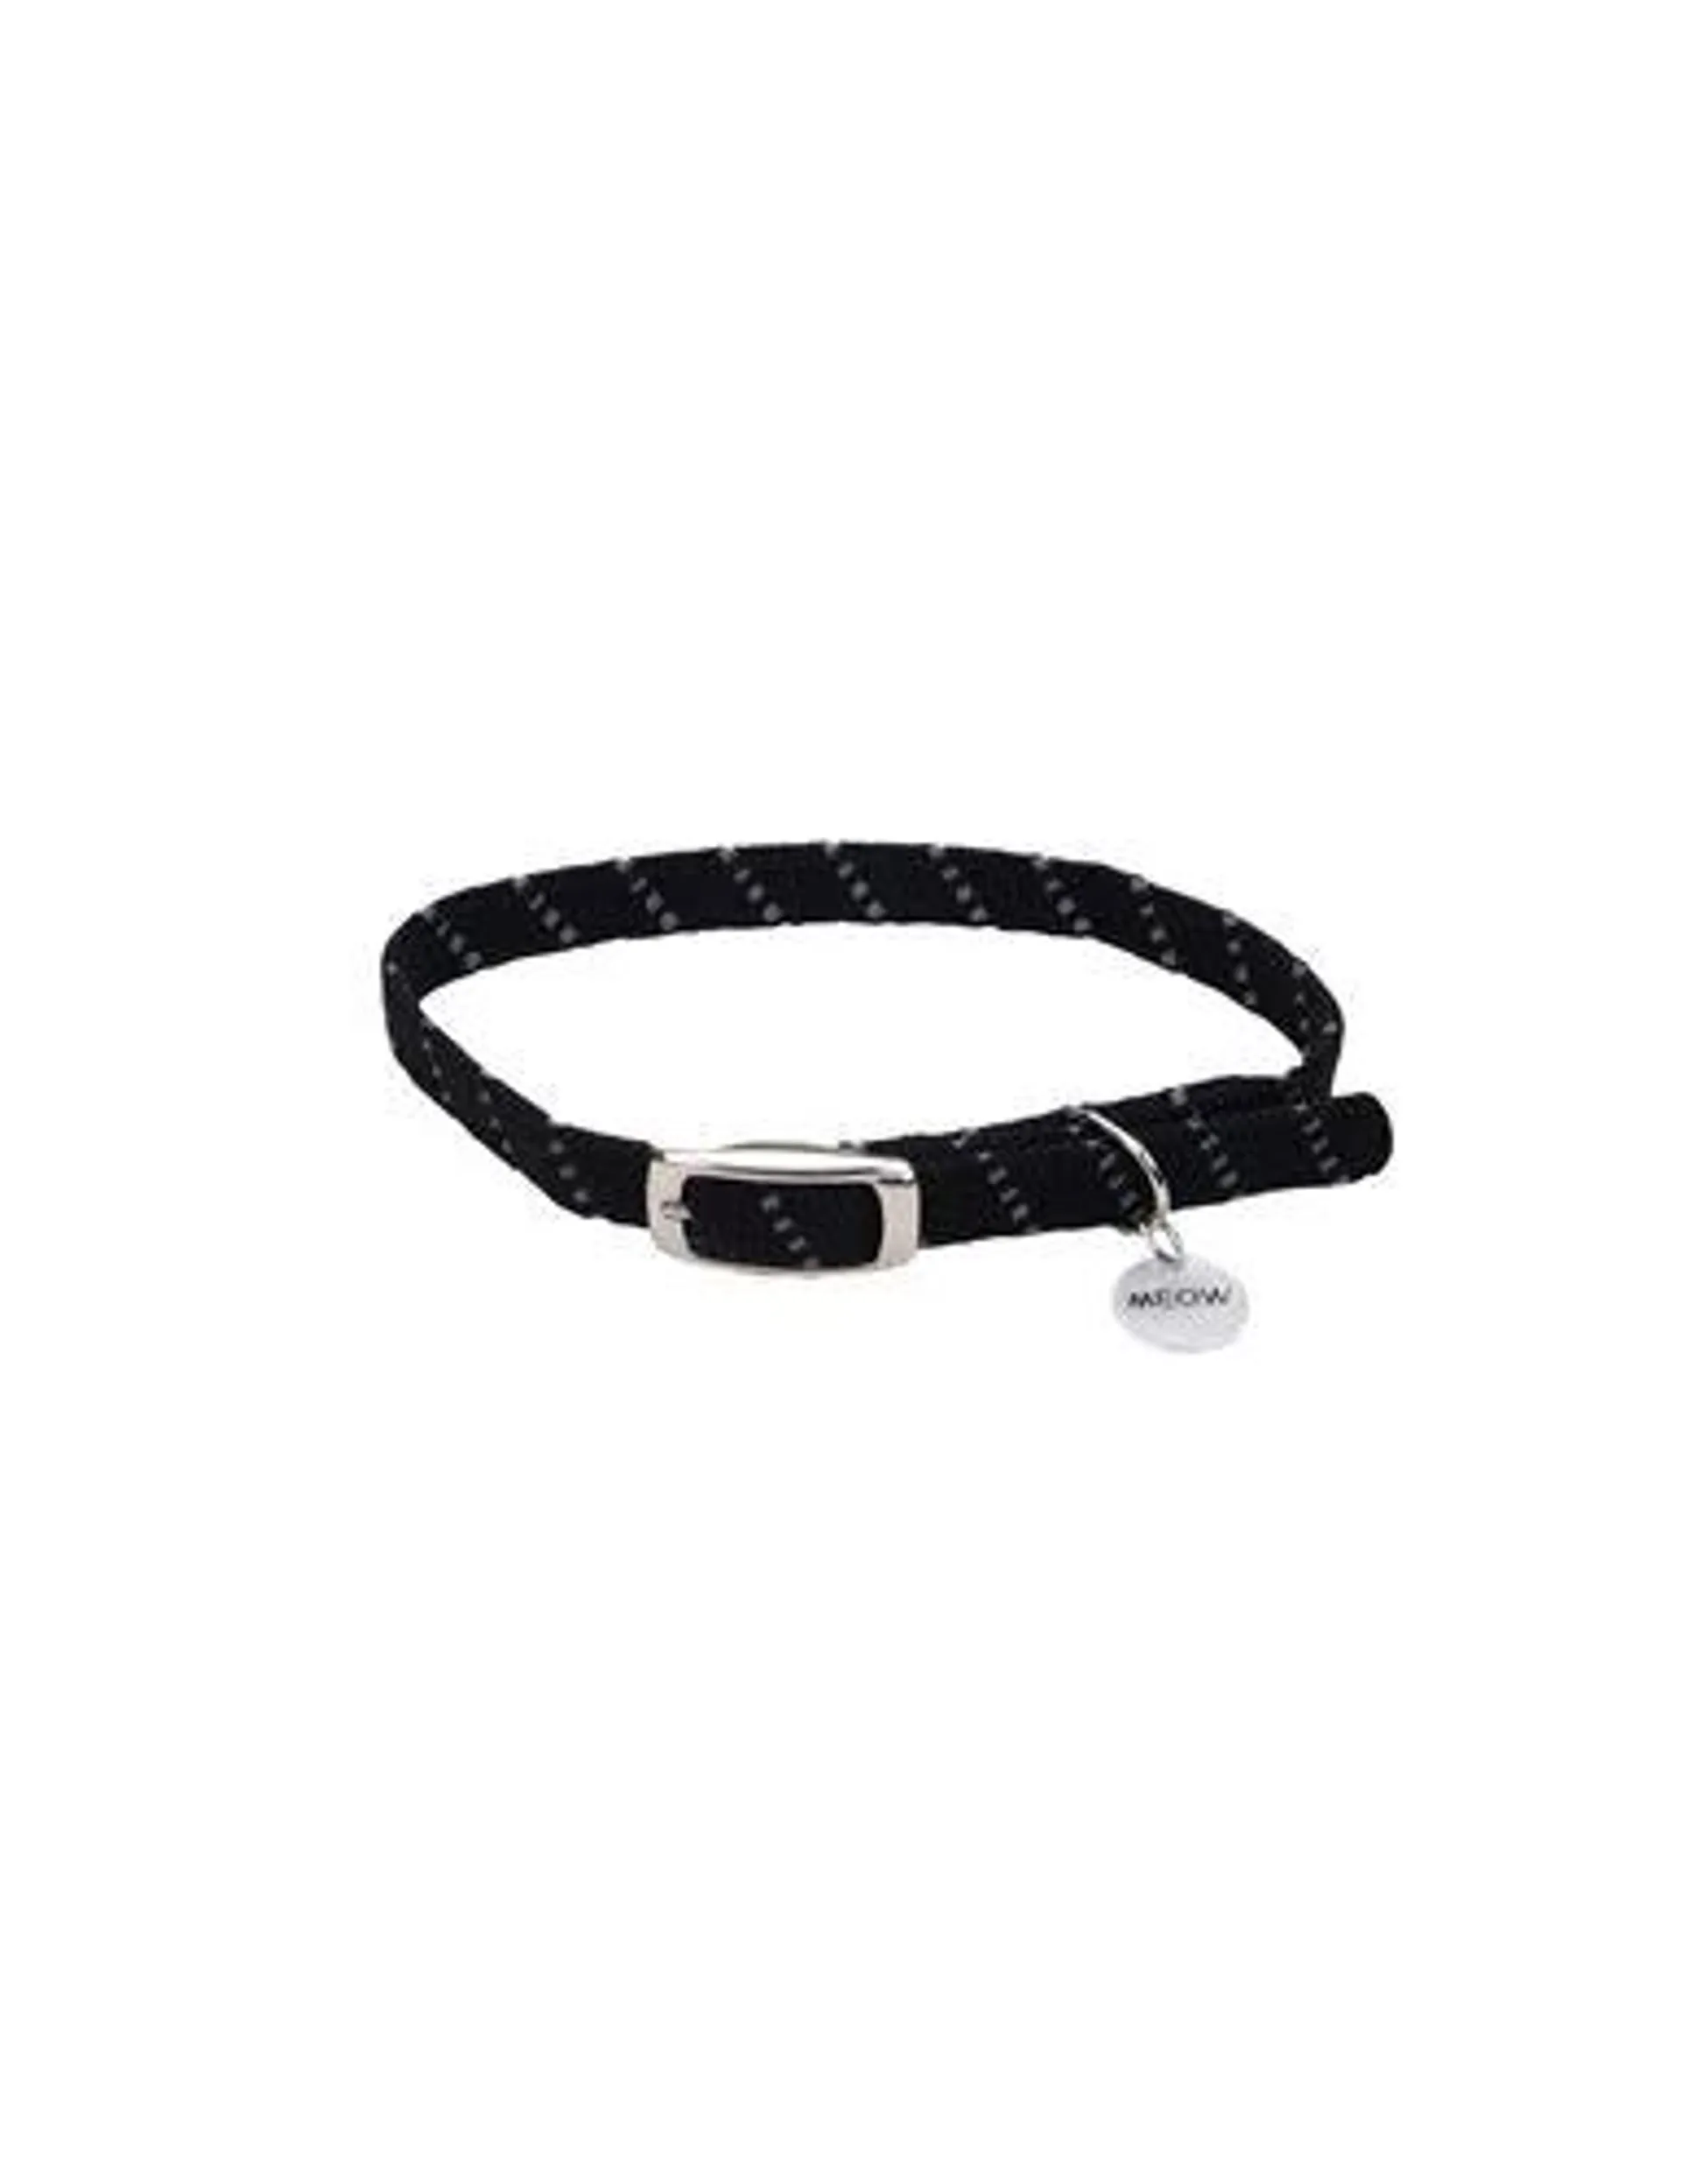 ElastaCat® Reflective Safety Stretch Collar with Reflective Charm, Black, 3/8" x 10"